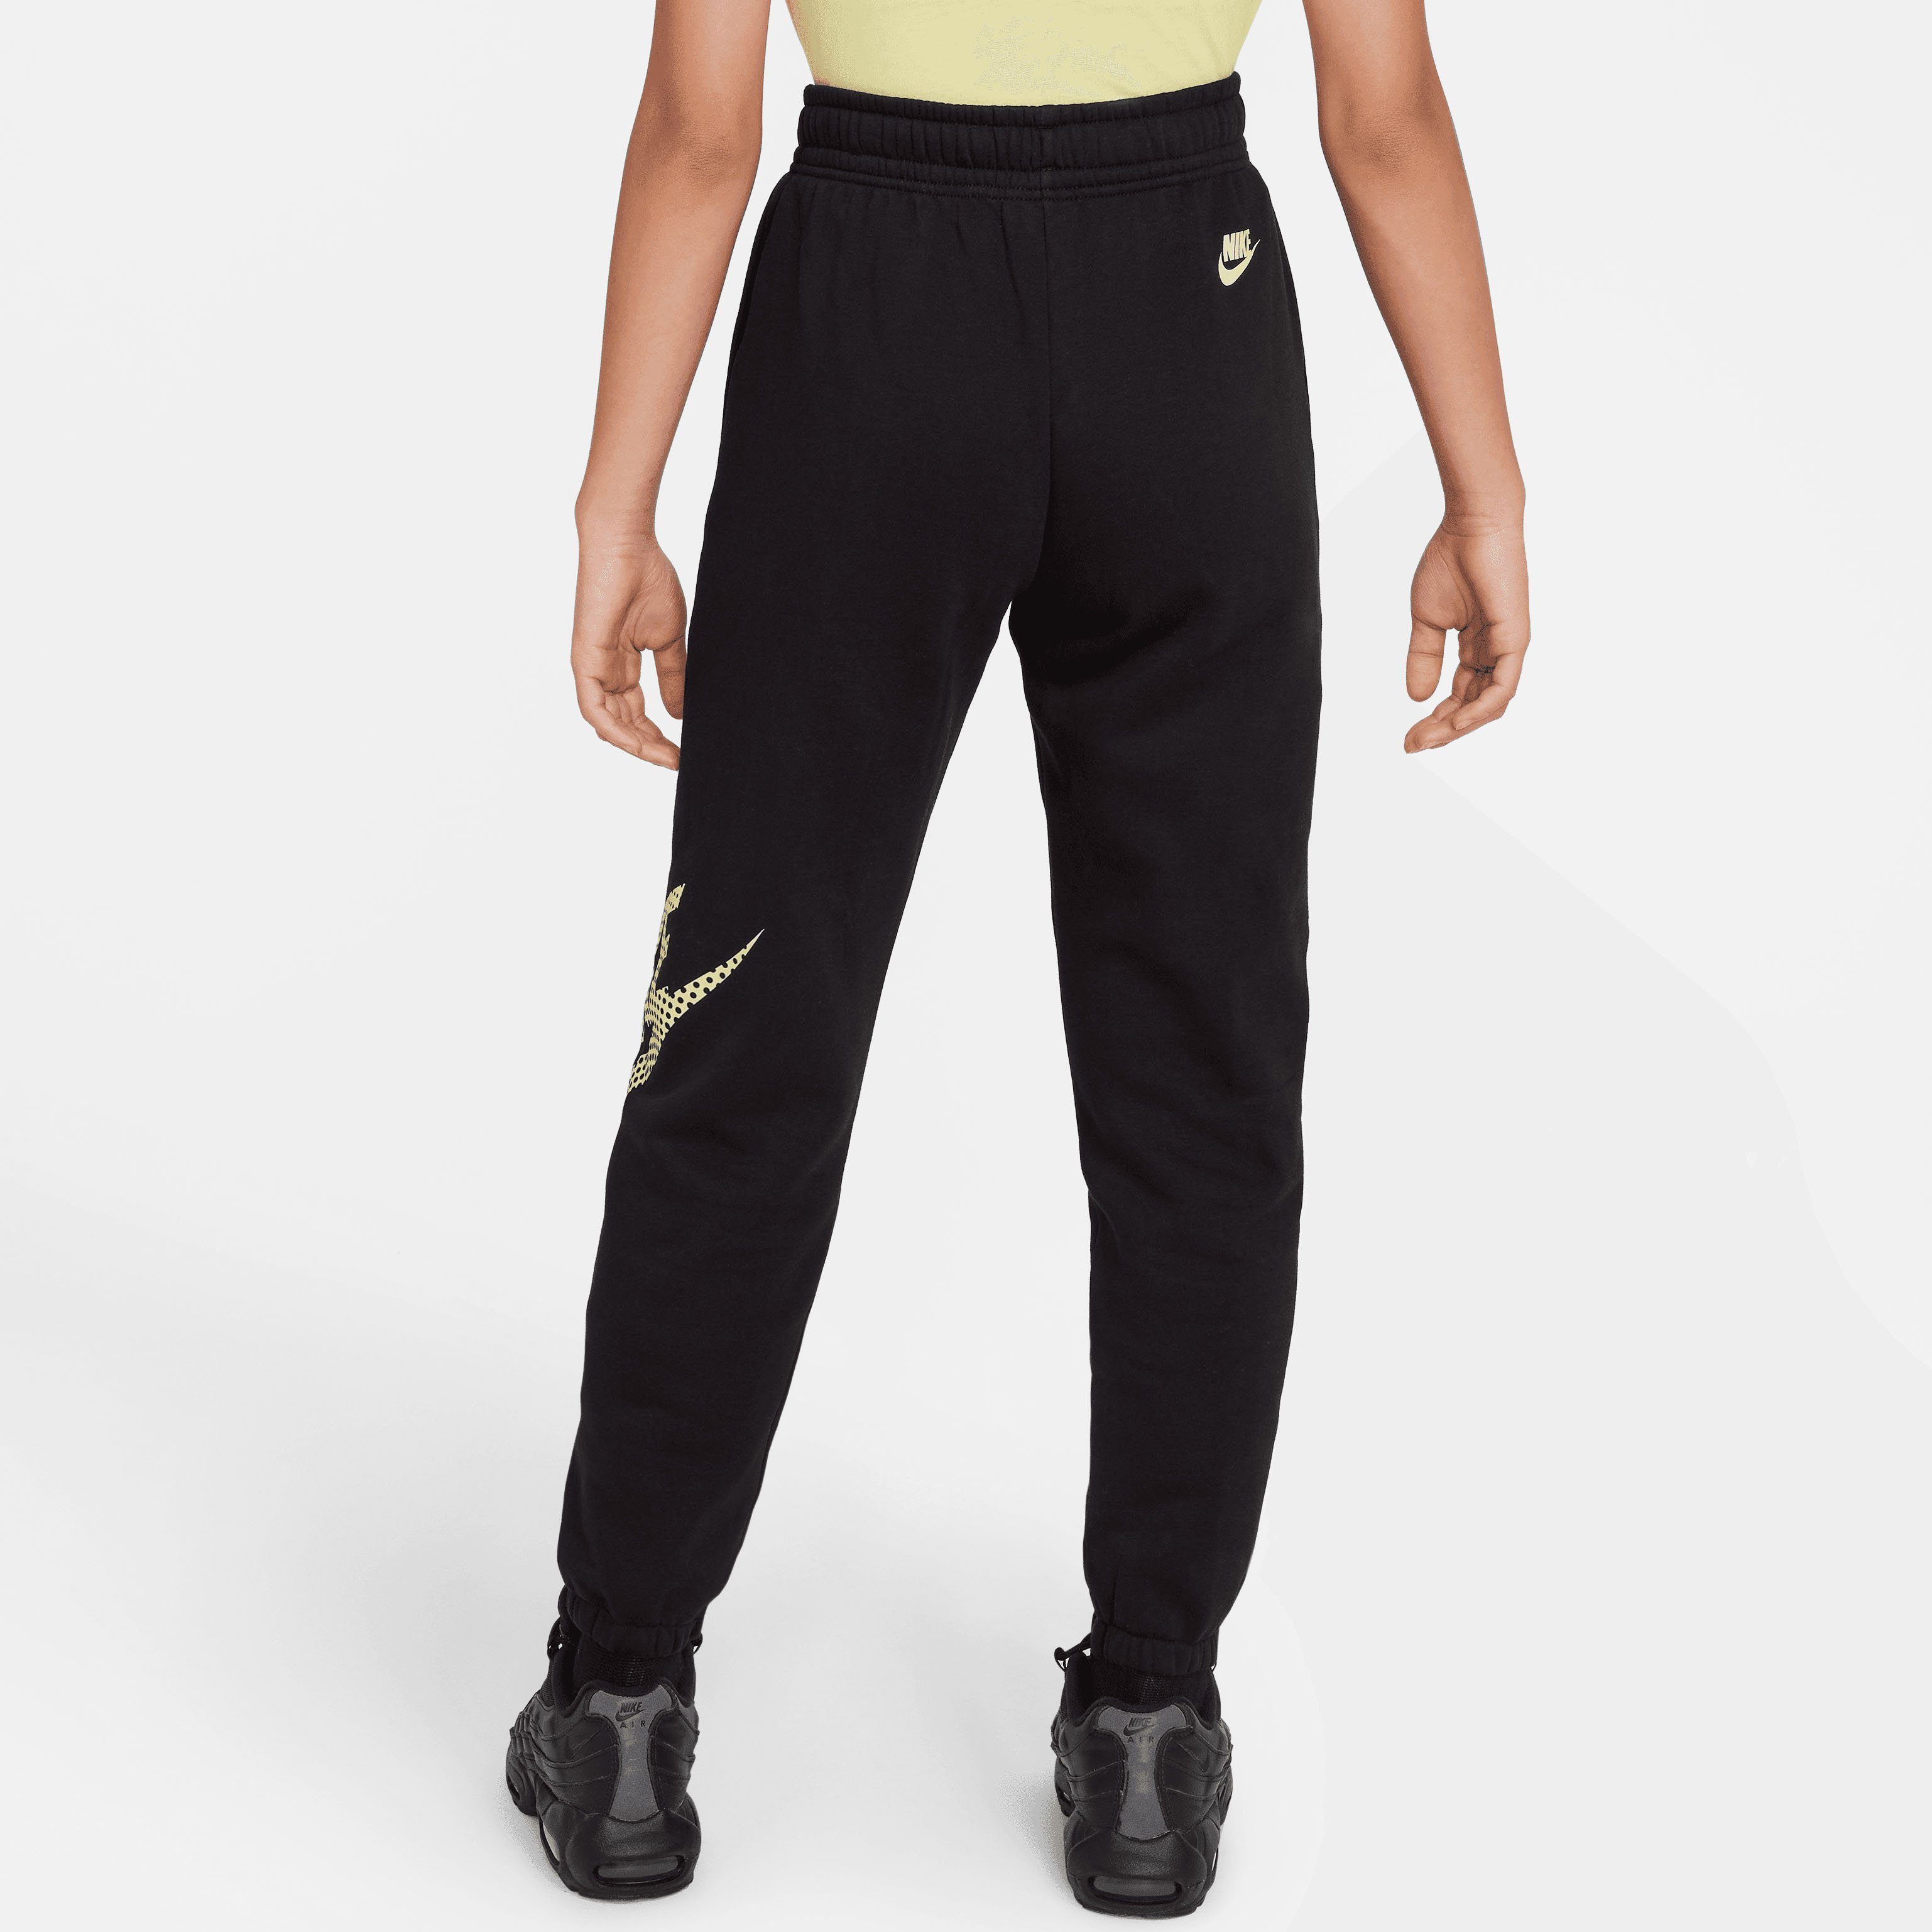 NSW PANT OS Nike Jogginghose G DNC FLC Sportswear